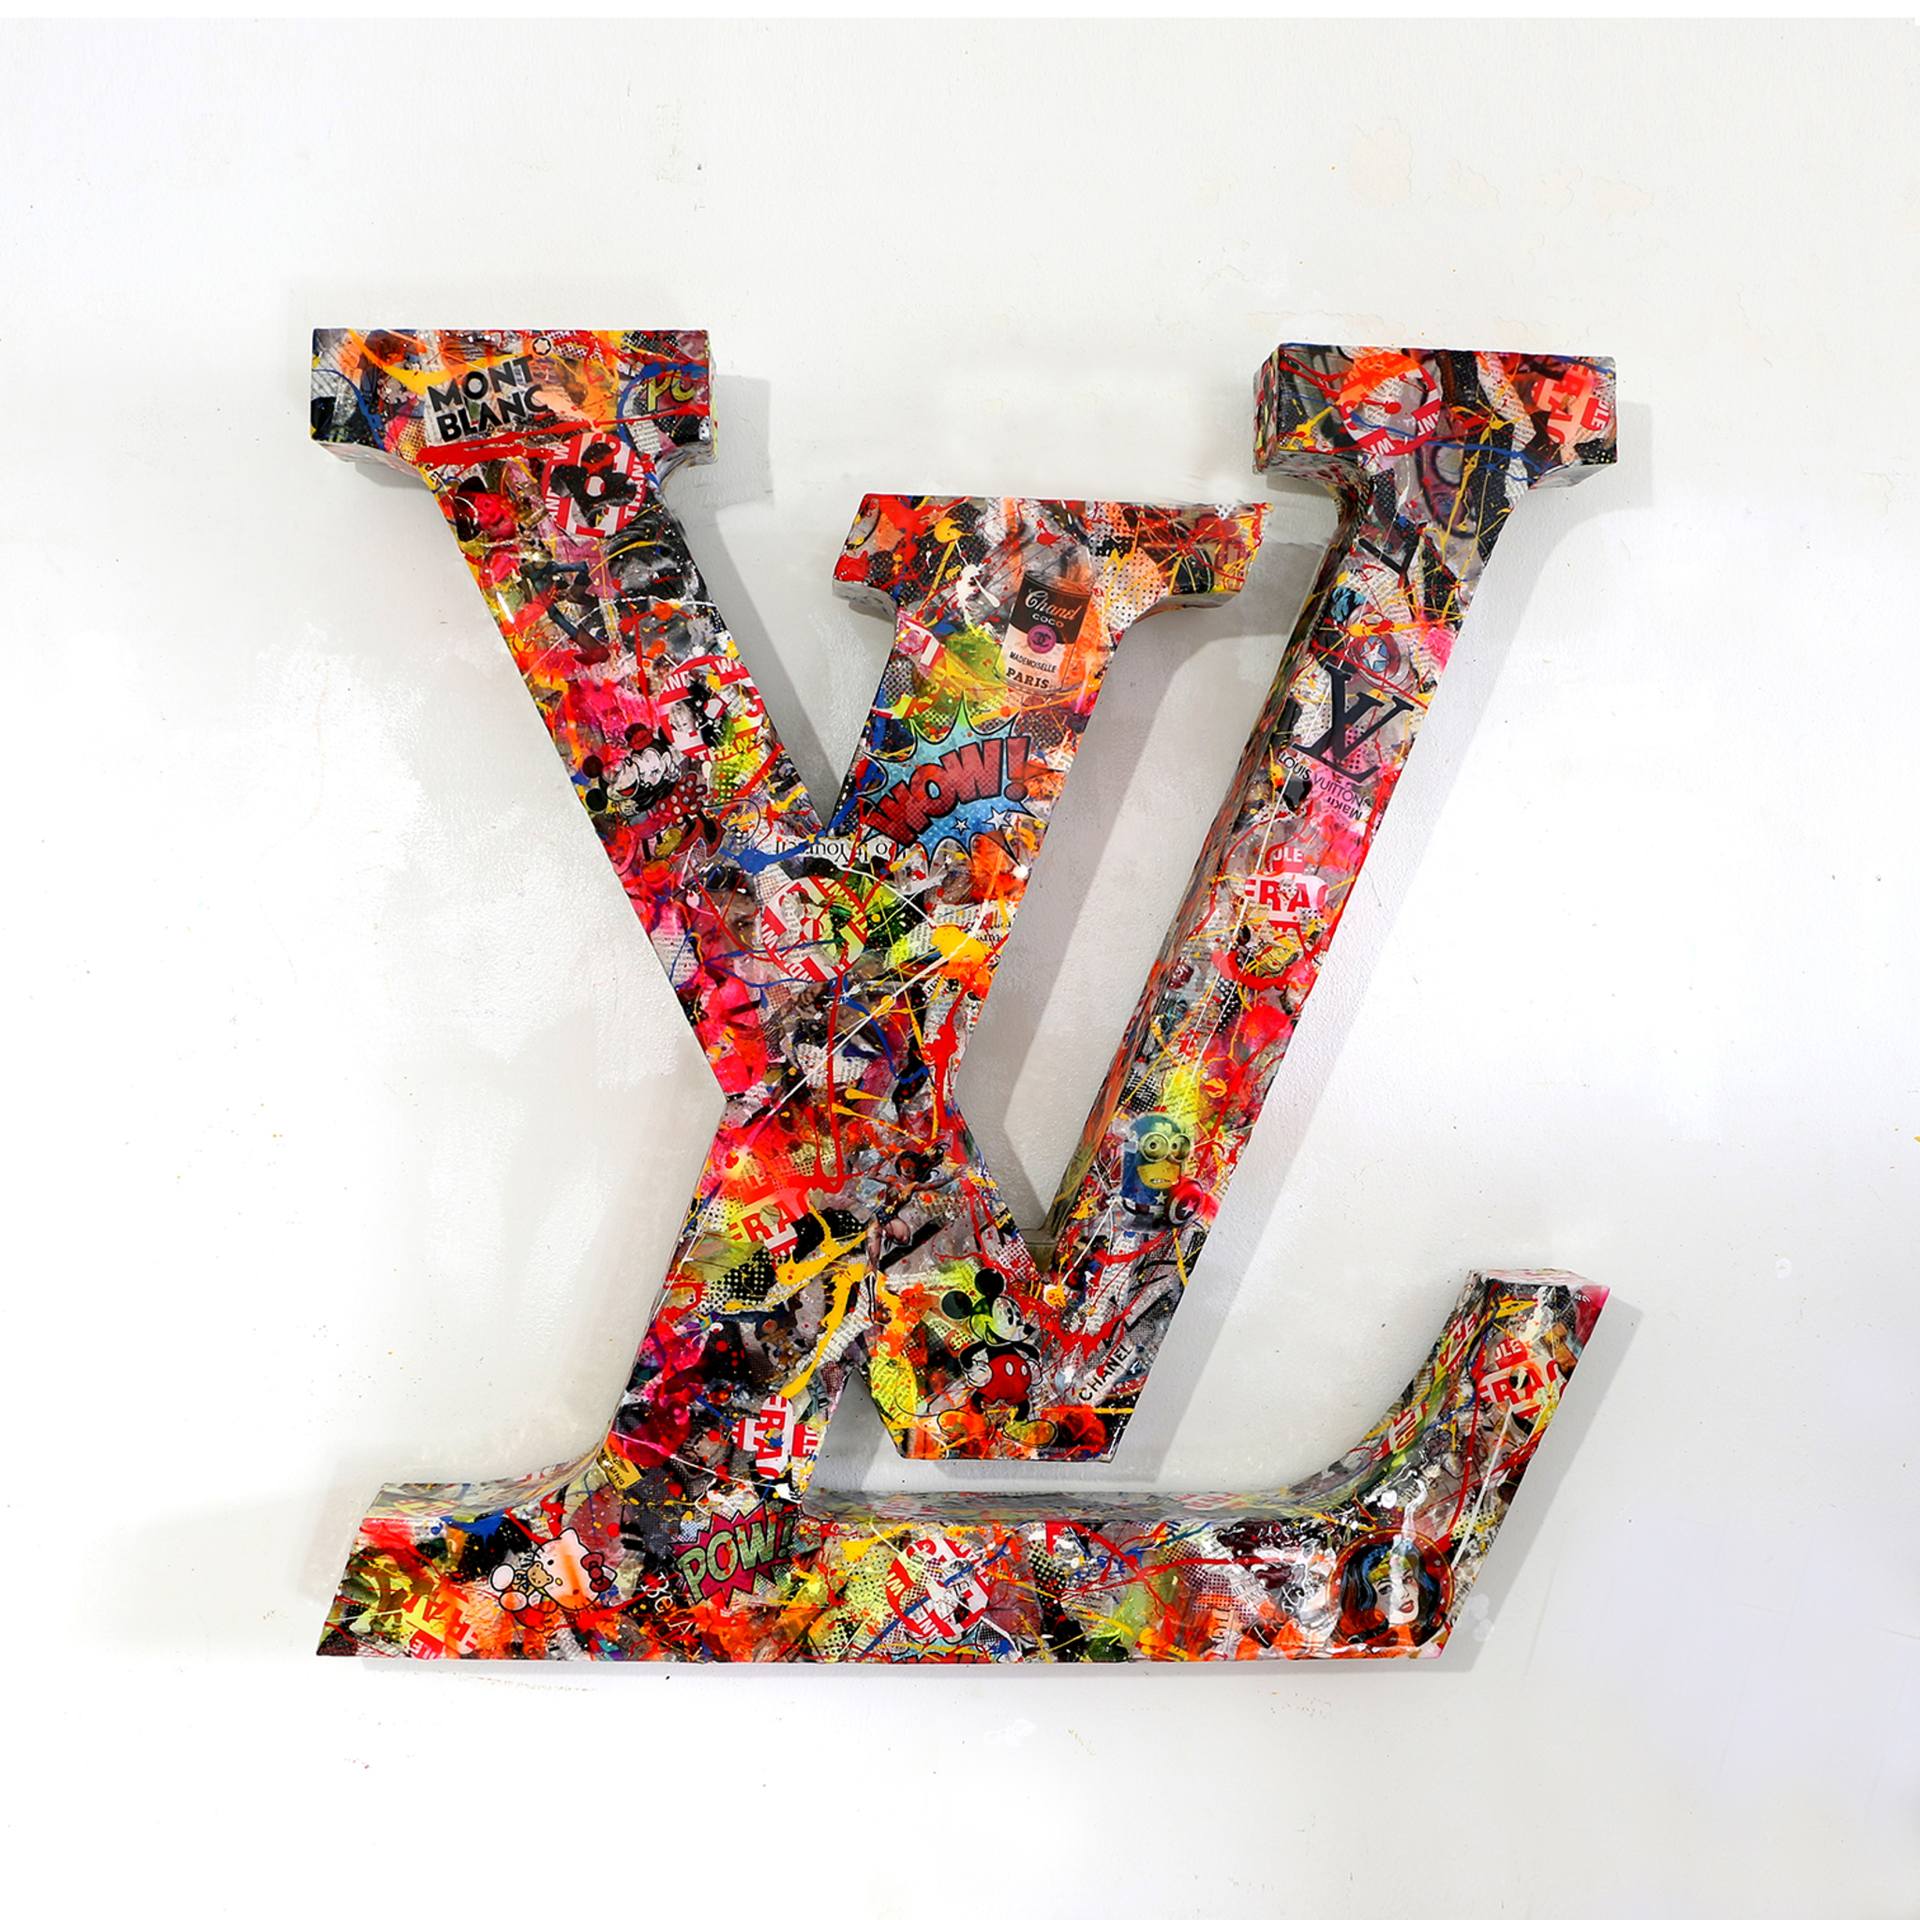 Louis Vuitton logo sculpture takes shape for the new Miami